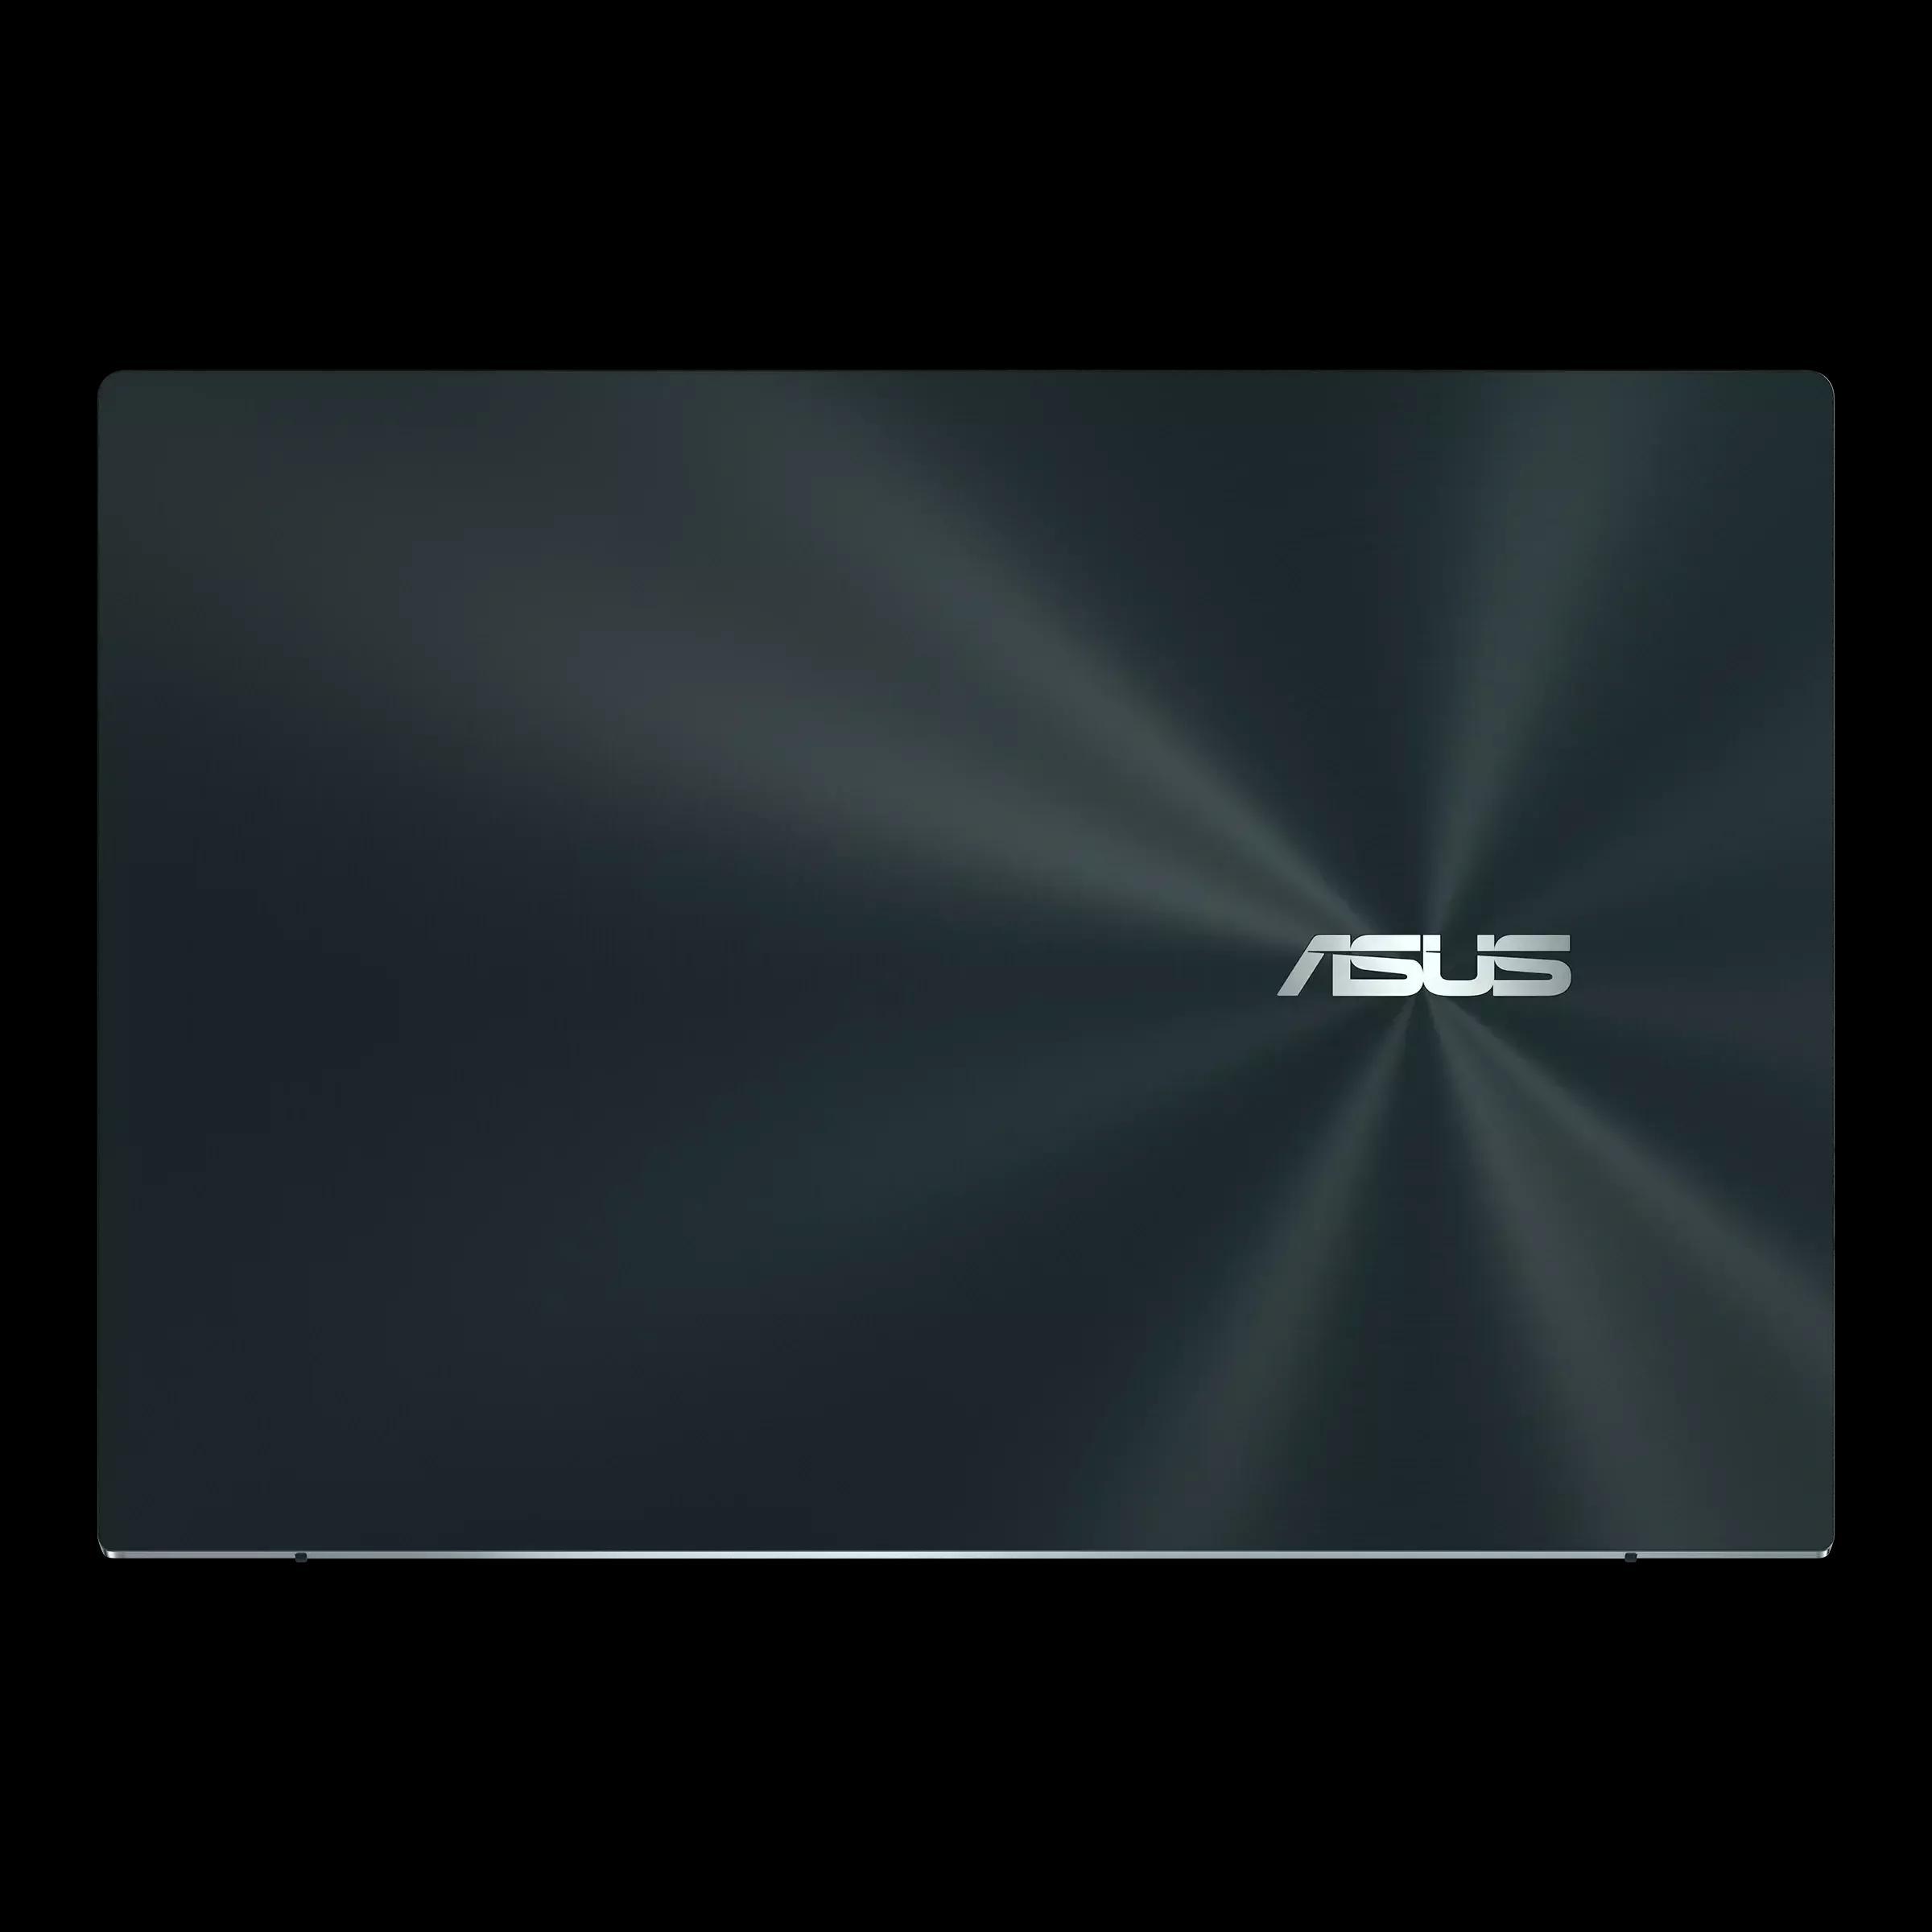 ASUS ZENBOOK DUO UX482EG i7 11TH GEN/ 16GB RAM/ 1TB SSD/ MX450 / STYLUS/ 14" FHD Touchscreen + 12.6" FHD TOUCH